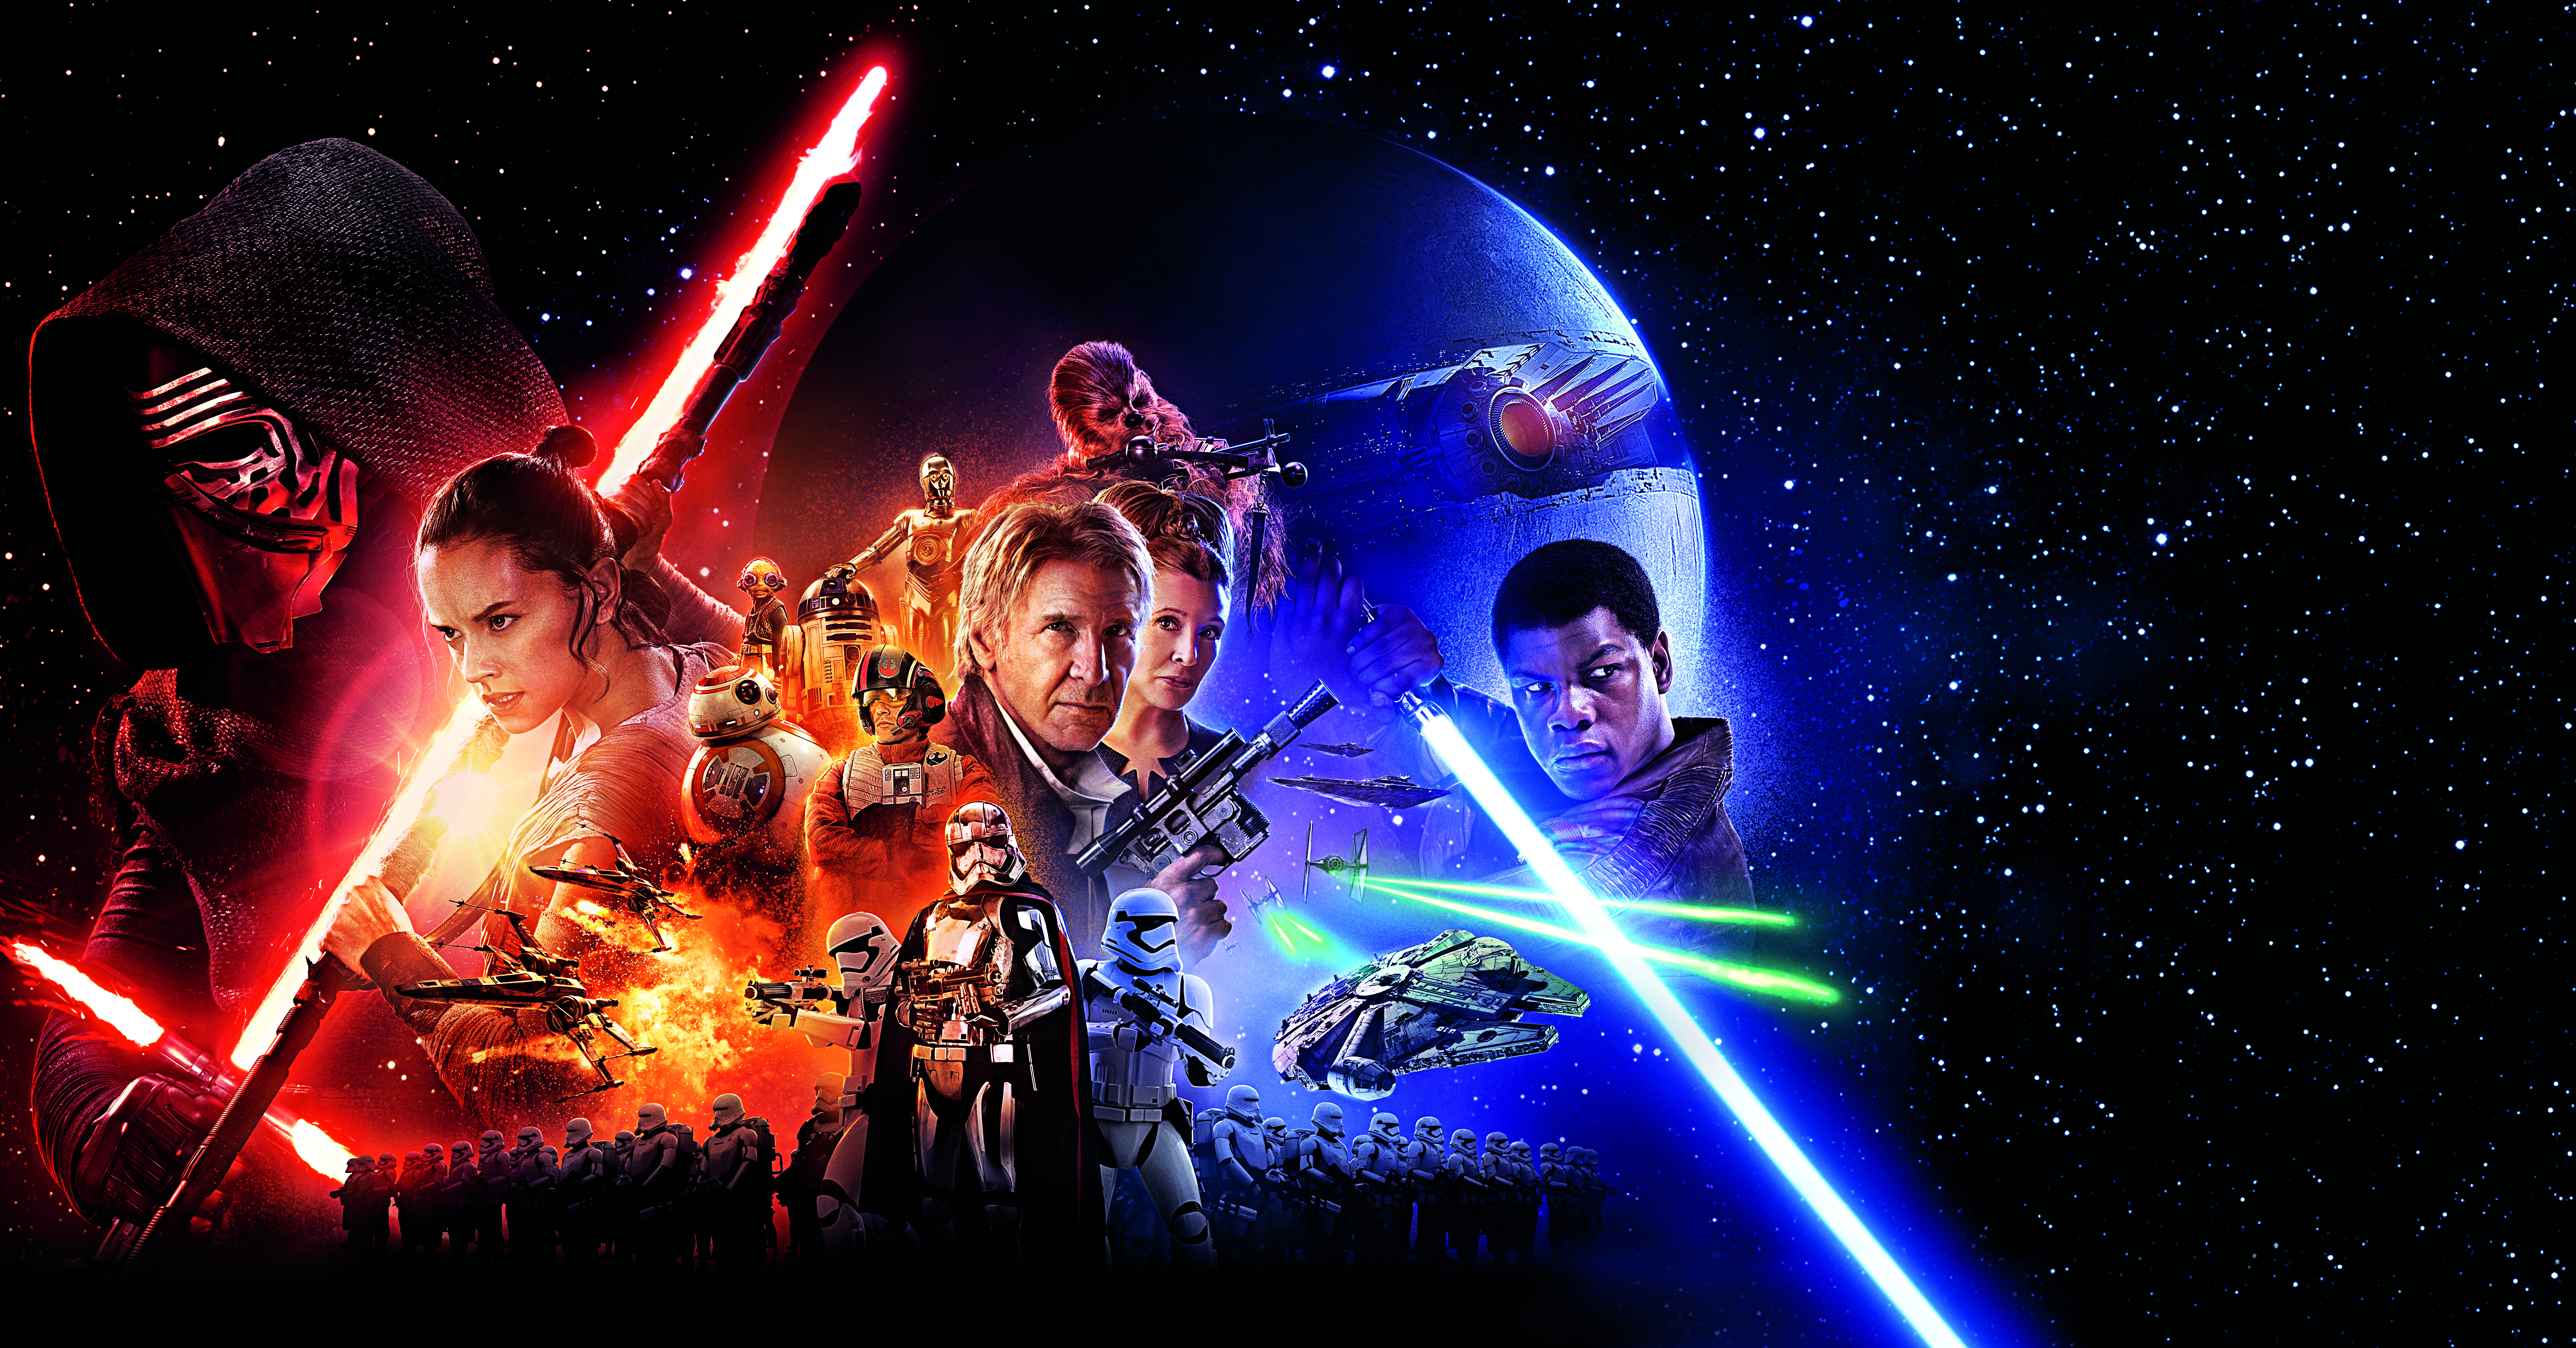 Wallpapers adventure Star wars: the force awakens 2015 banner on the desktop